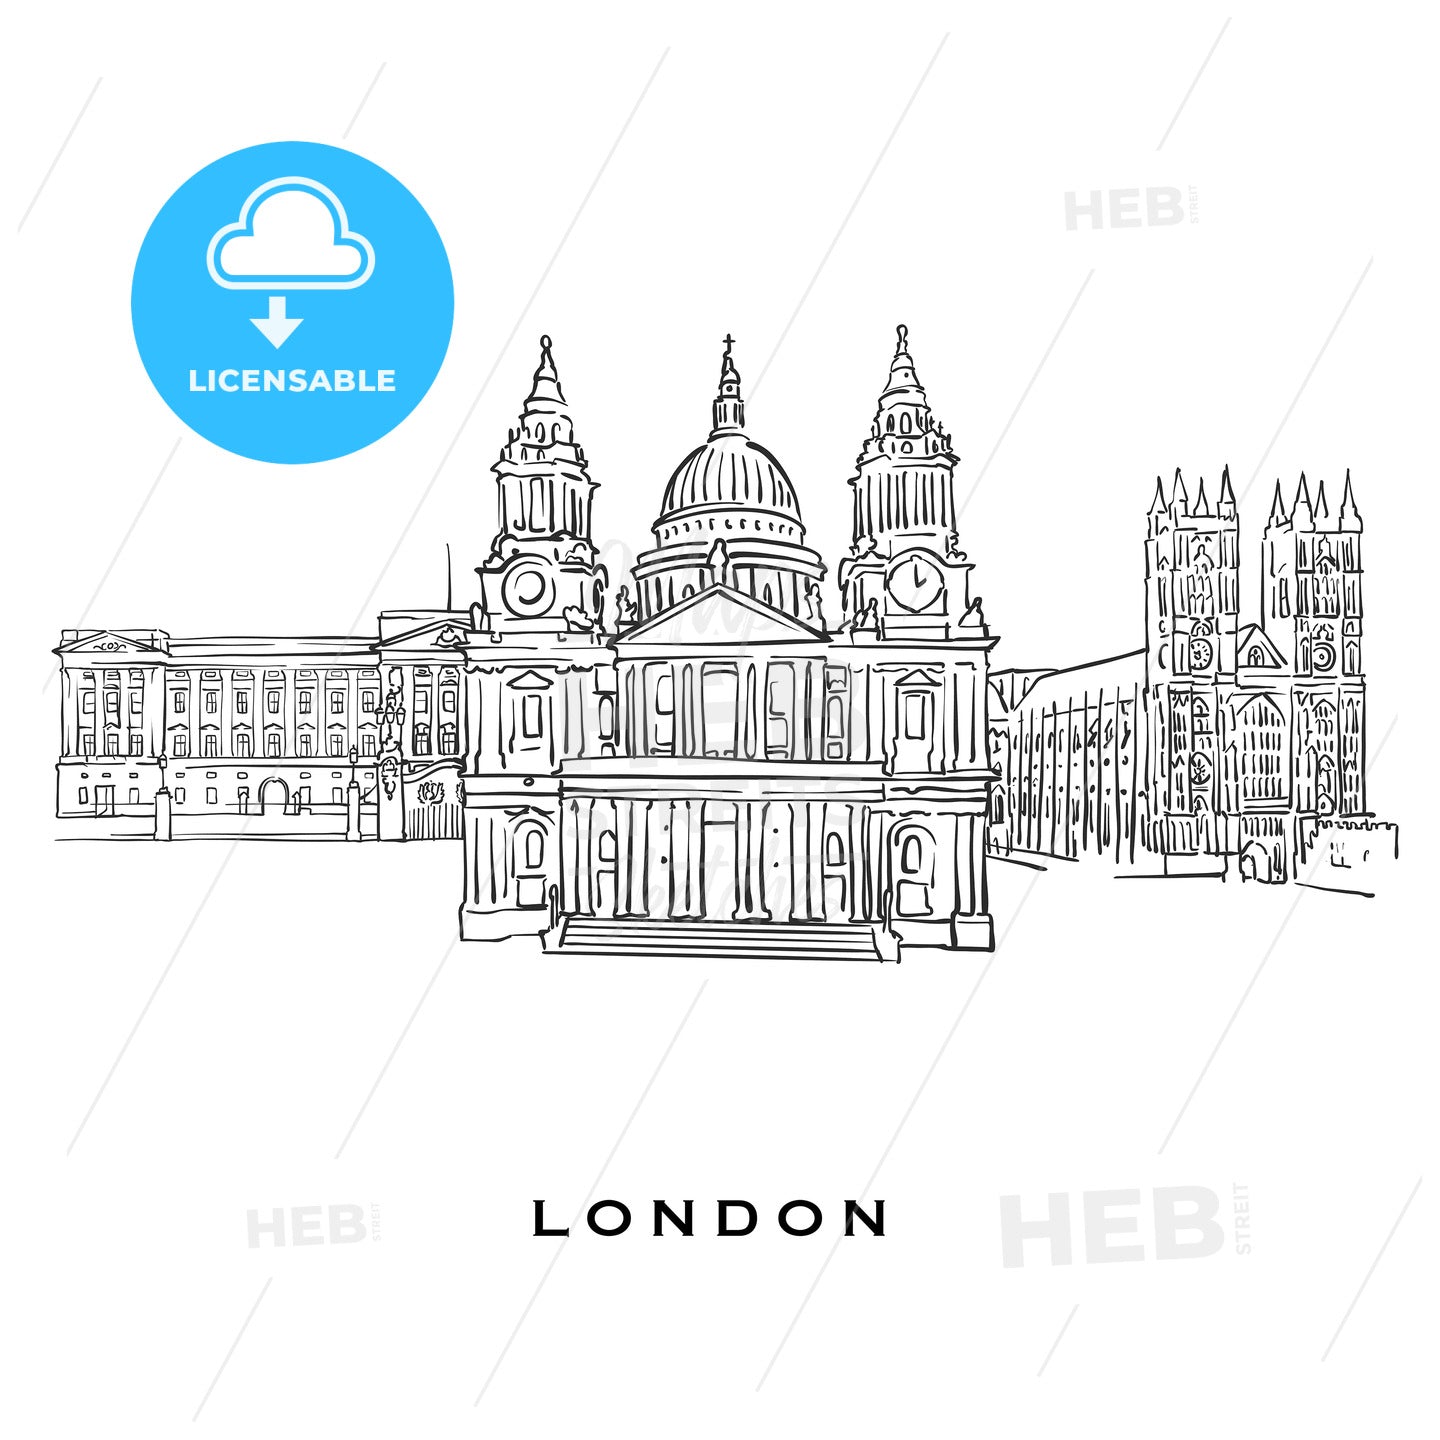 London United Kingdom famous architecture – instant download